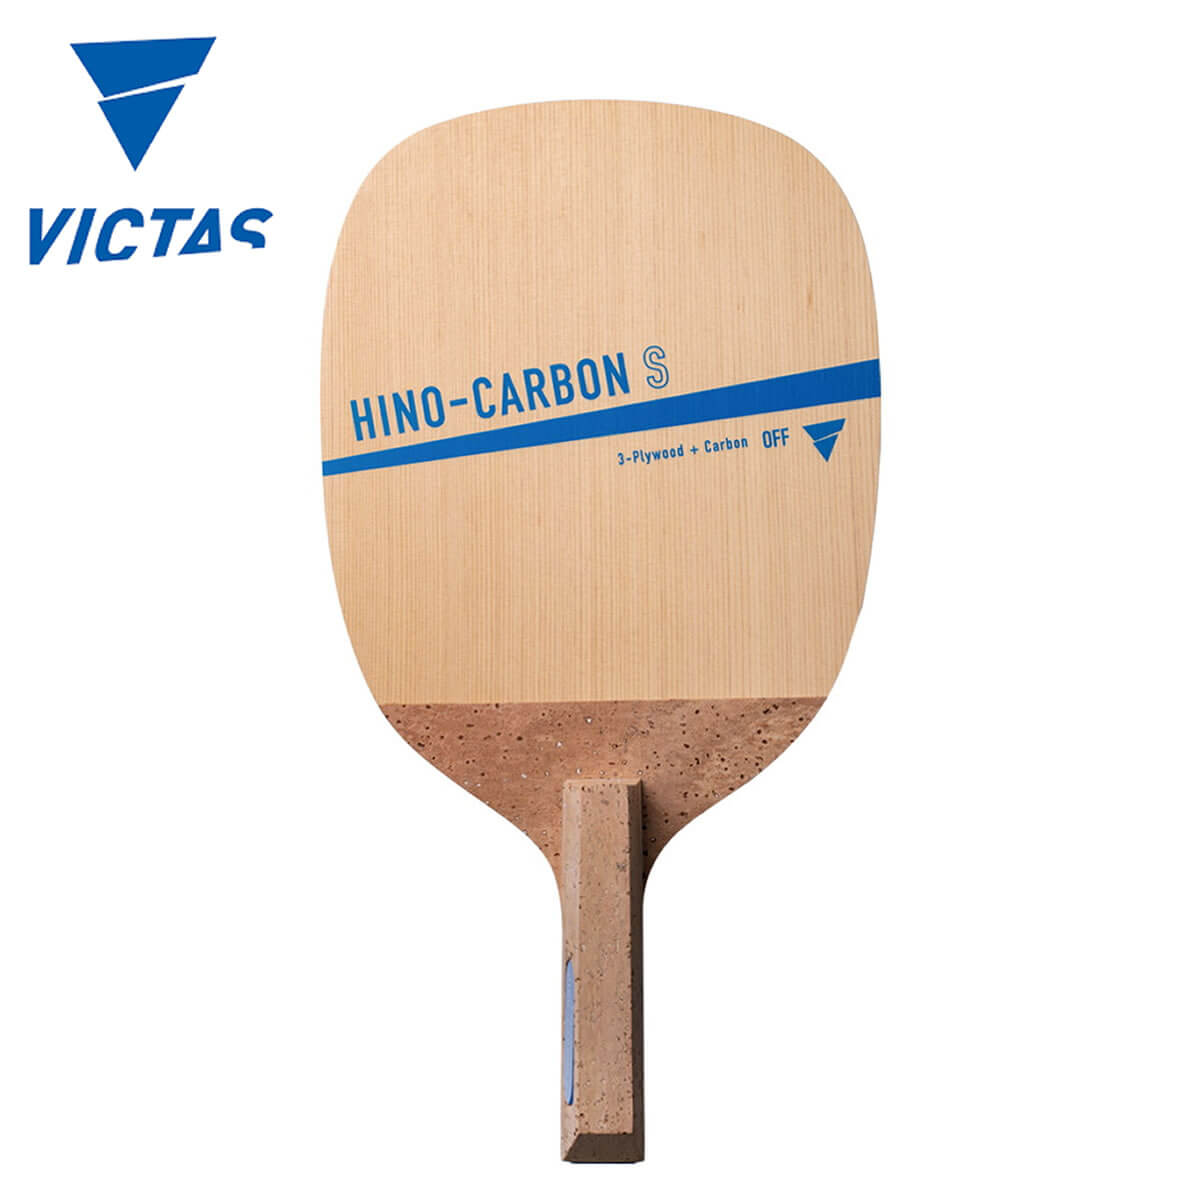 VICTAS 300001 HINO-CARBON S 卓球ラケット ヴィクタス 2021春夏 【取り寄せ】